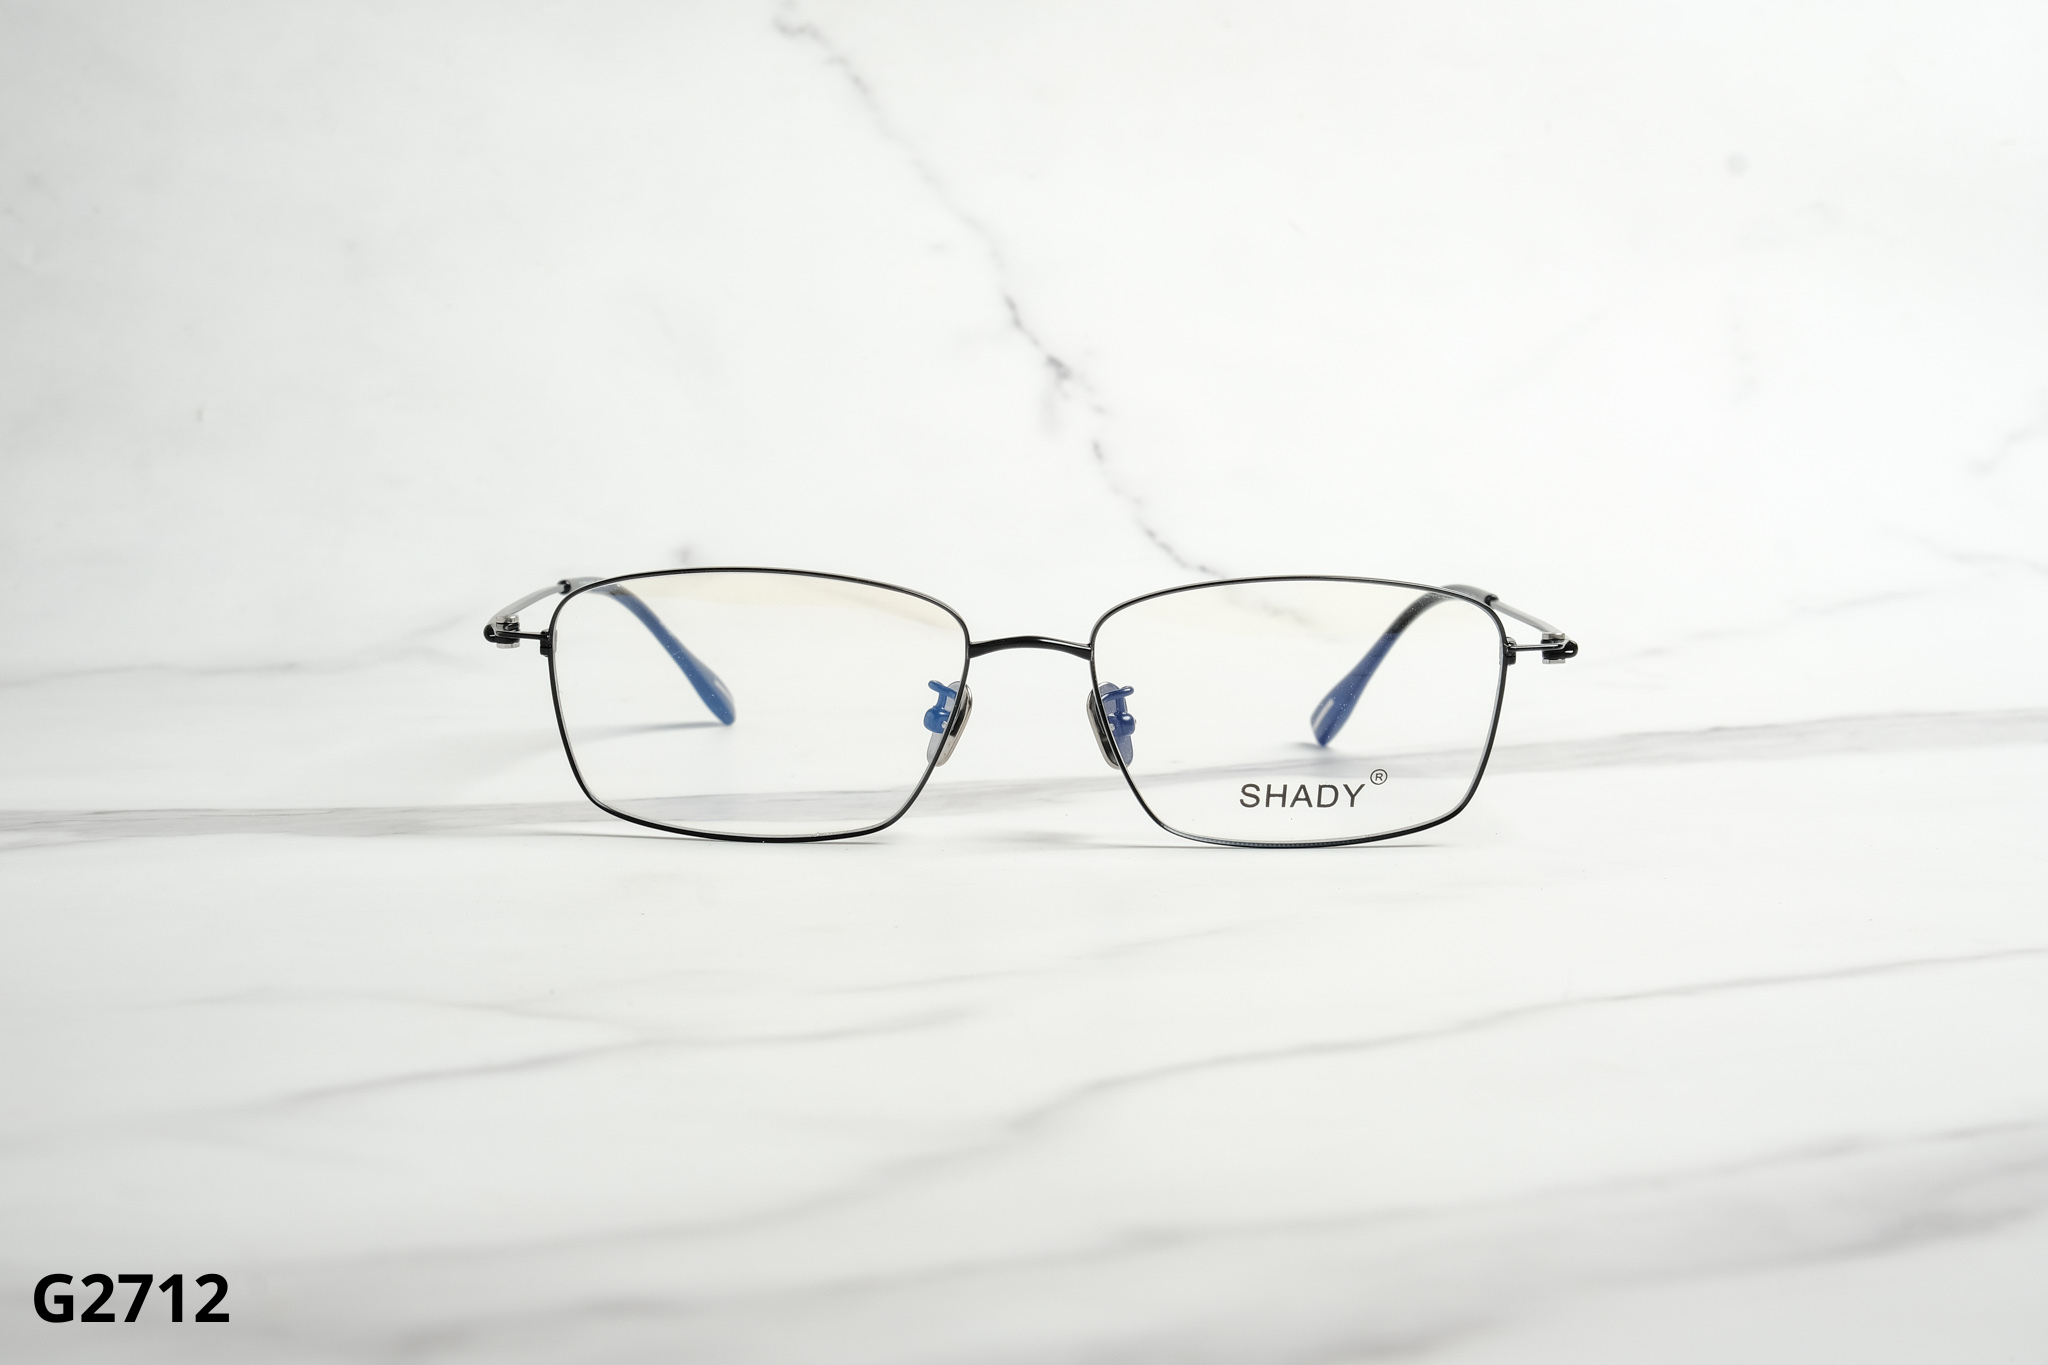  SHADY Eyewear - Glasses - G2712 